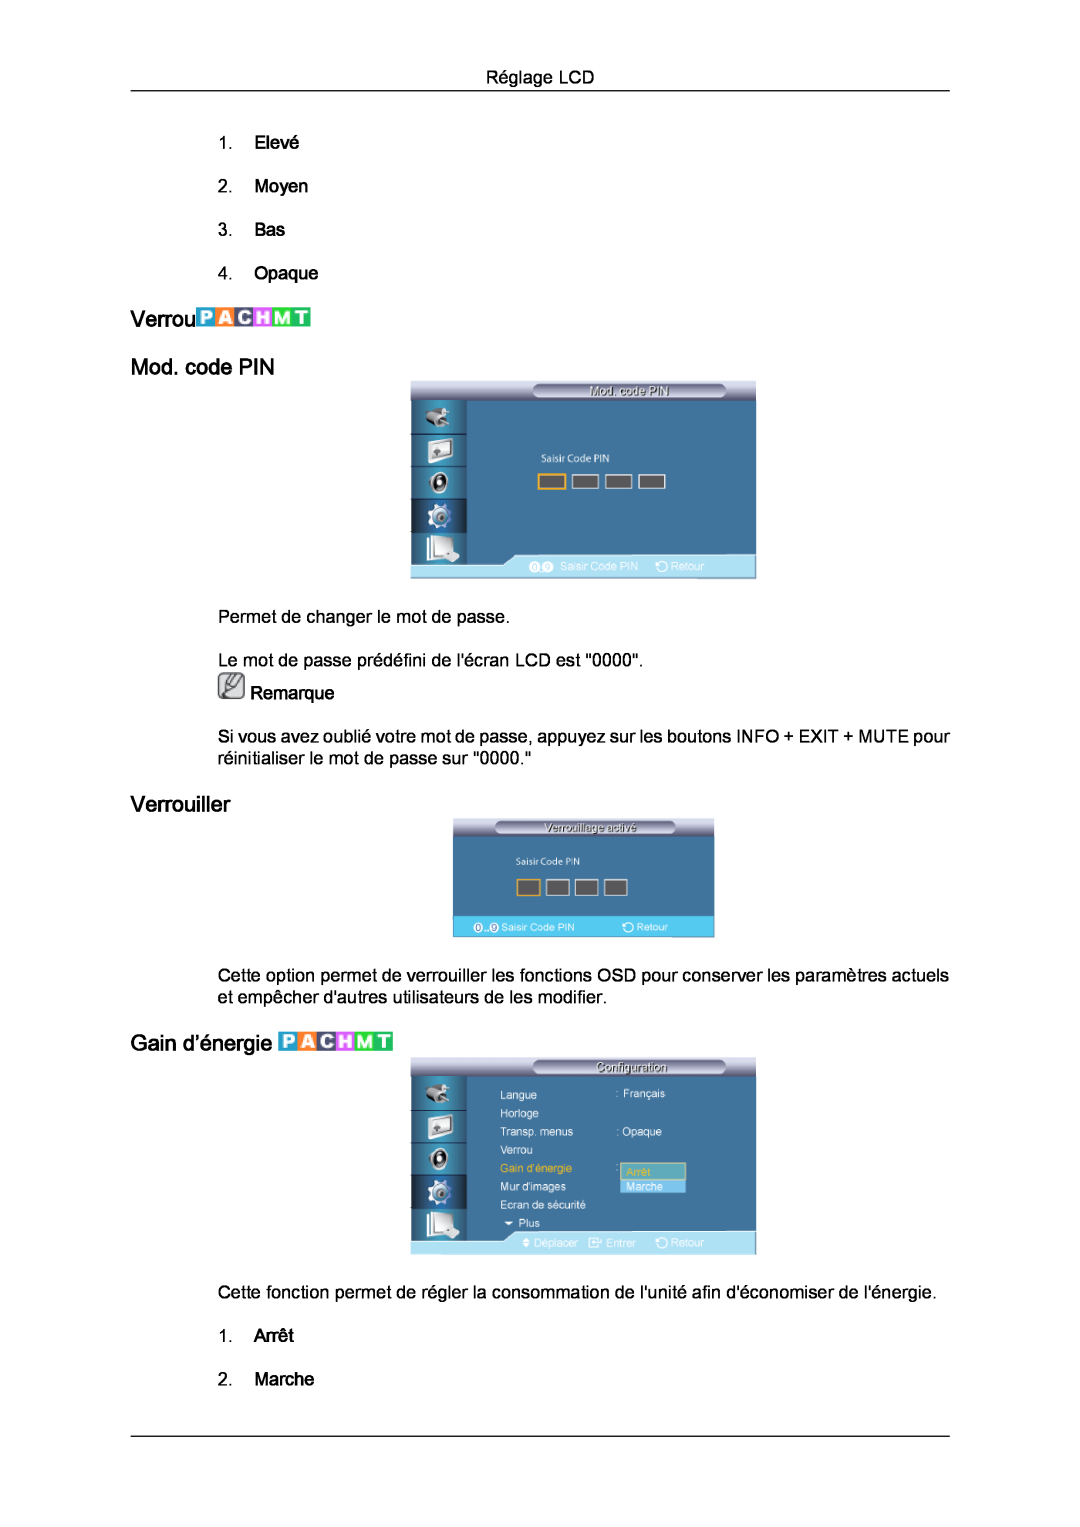 Samsung LH32CRSMBC/EN manual Verrou Mod. code PIN, Verrouiller, Gain d’énergie, Elevé 2. Moyen 3. Bas 4. Opaque, Remarque 